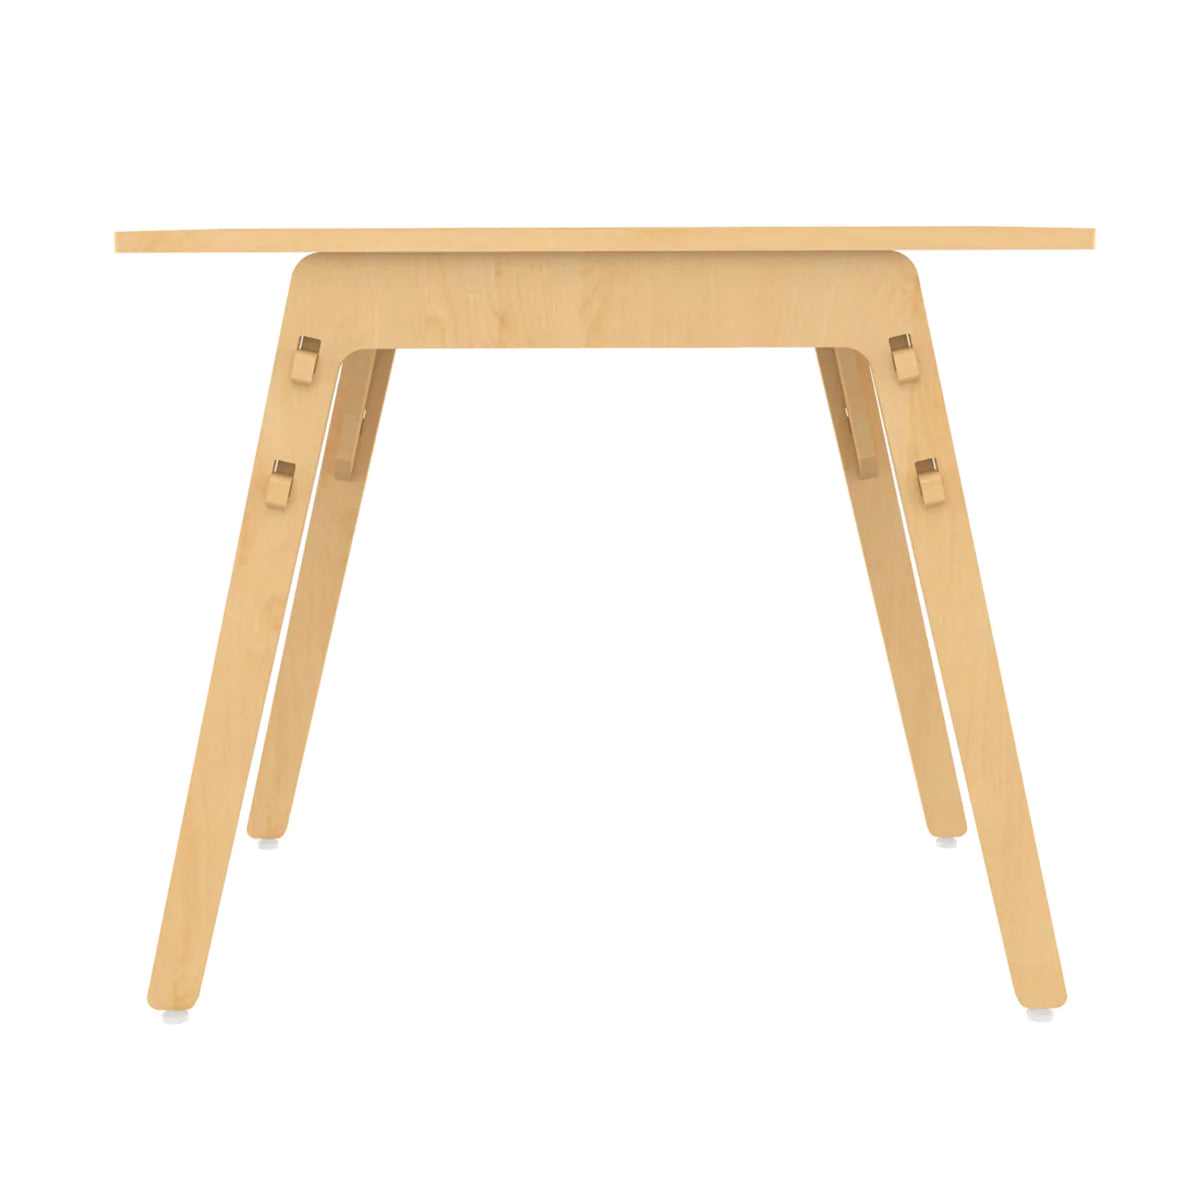 Buy Black Kiwi Wooden Table - Natural - Front View - SkilloToys.com